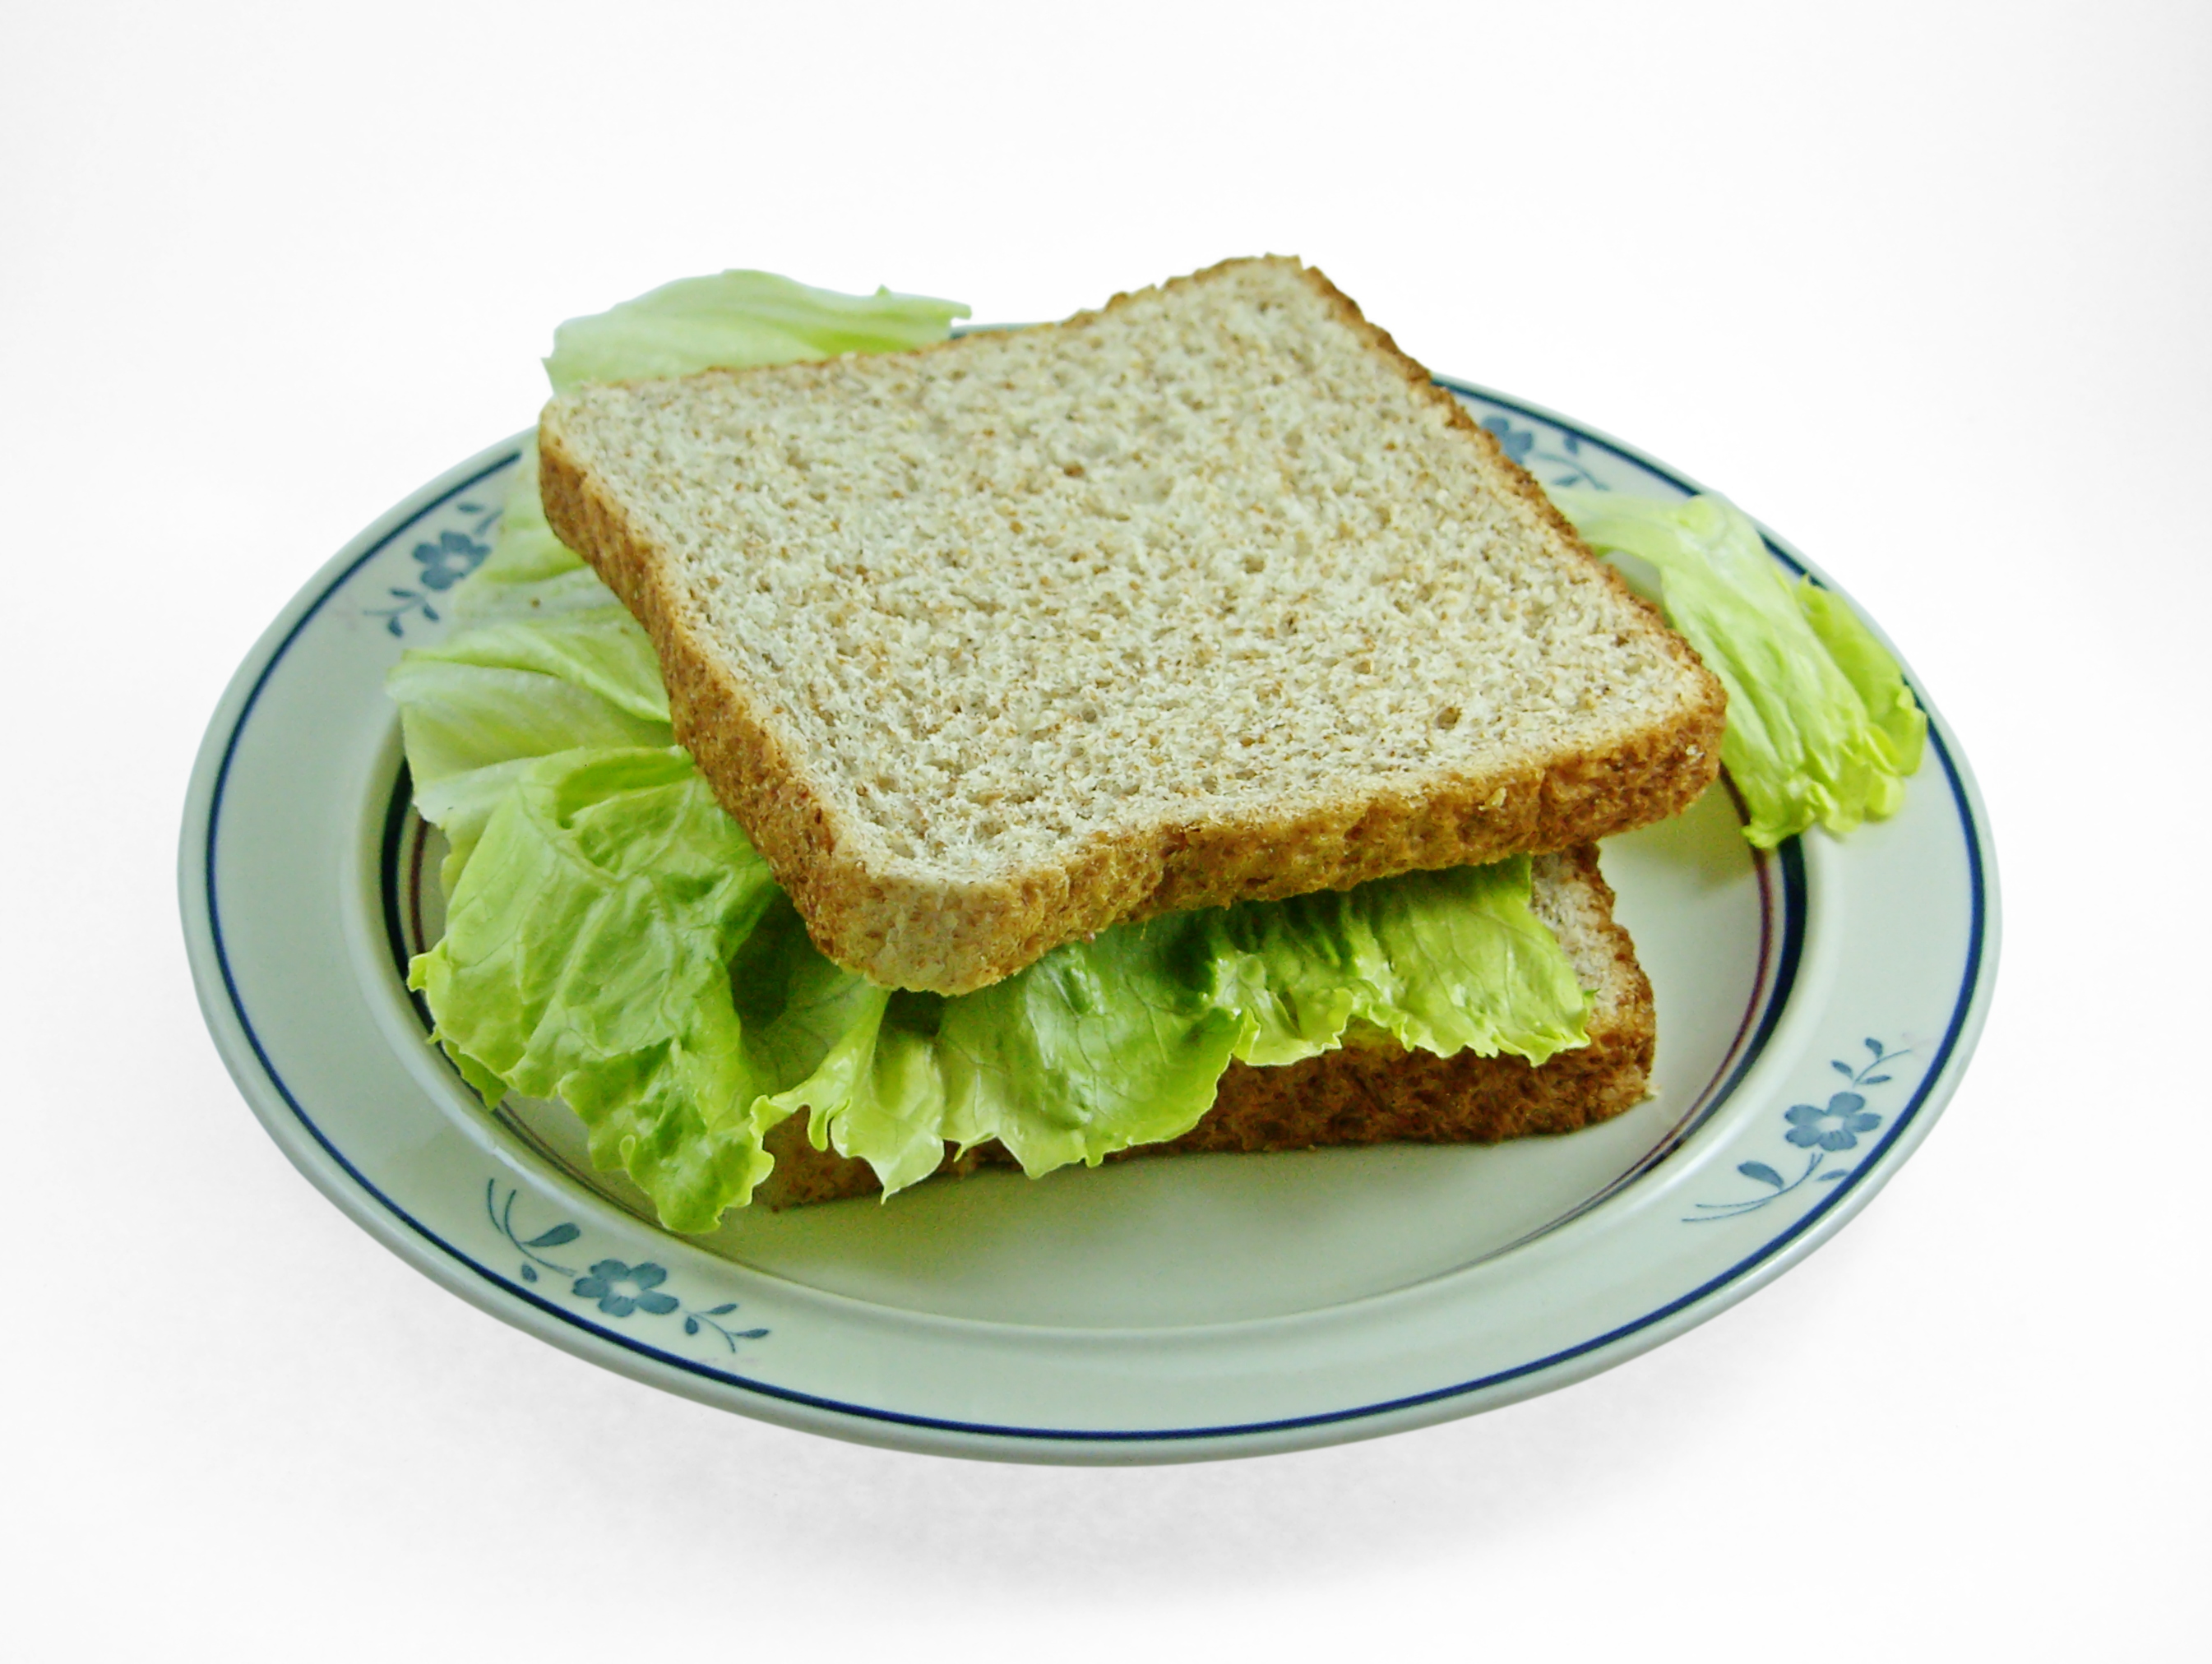 Sandwich photo